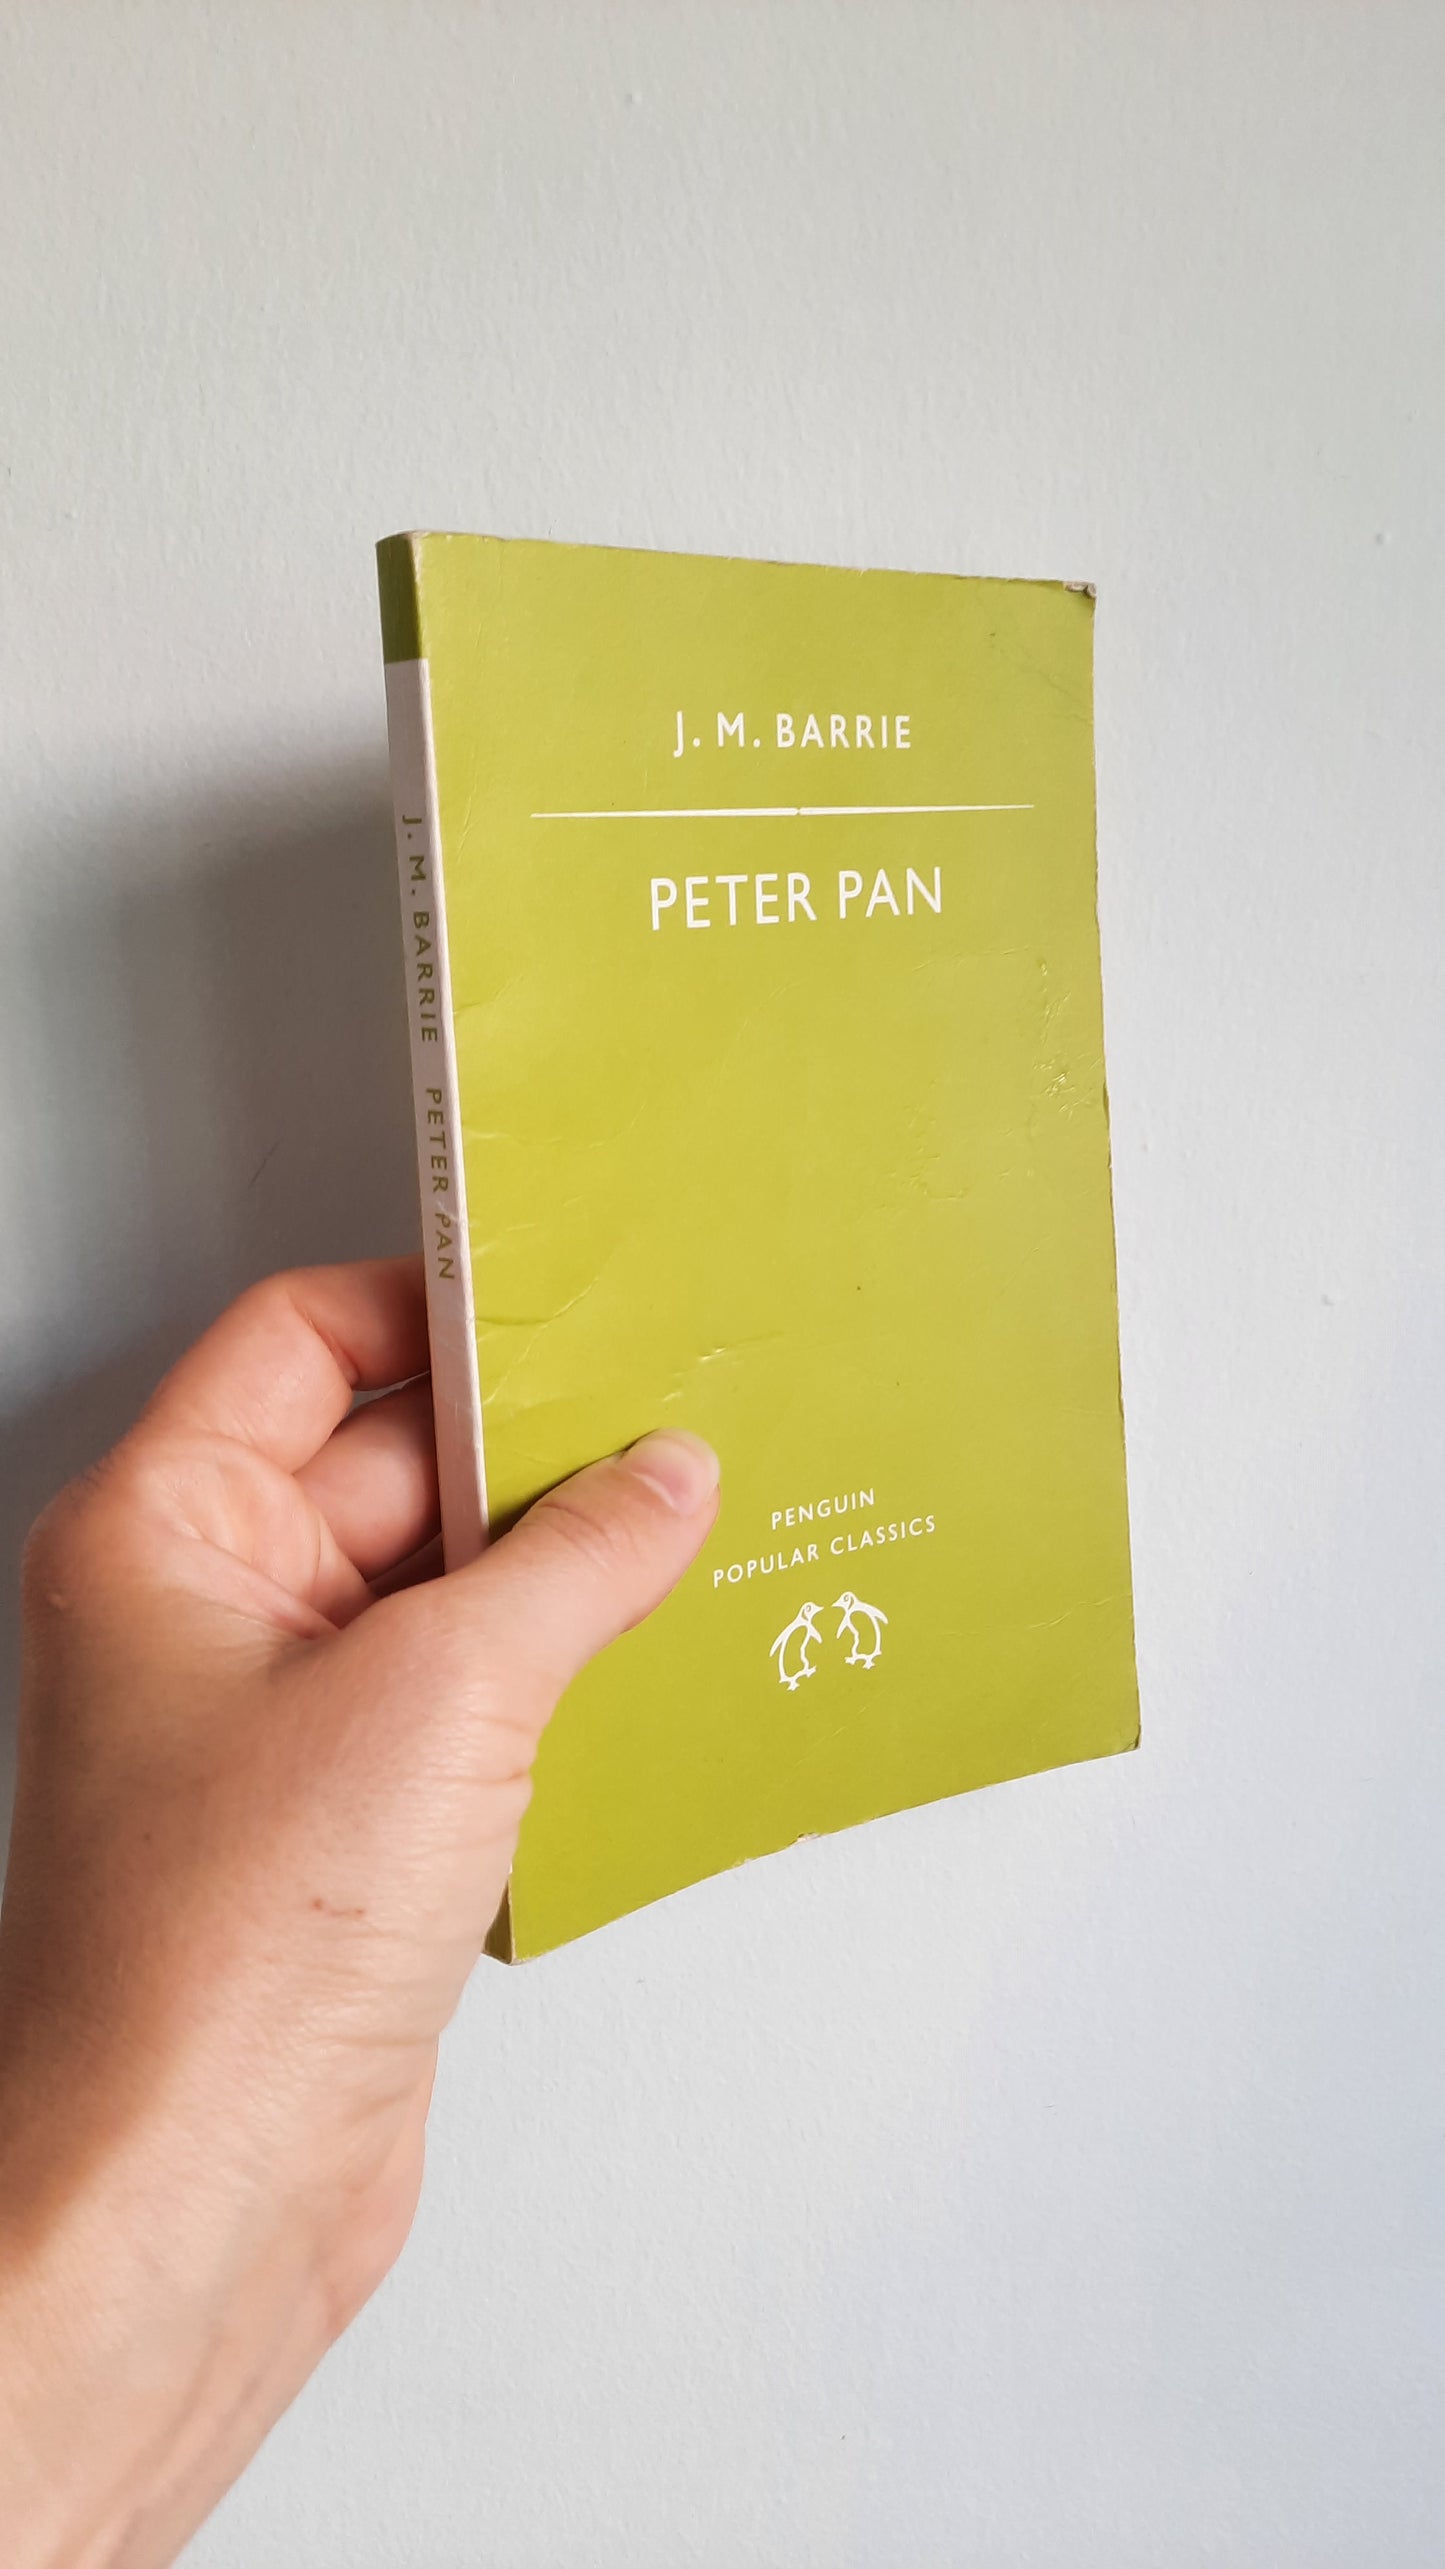 Penguin Popular Classics "Peter Pan" 1995 by J. M. Barrie